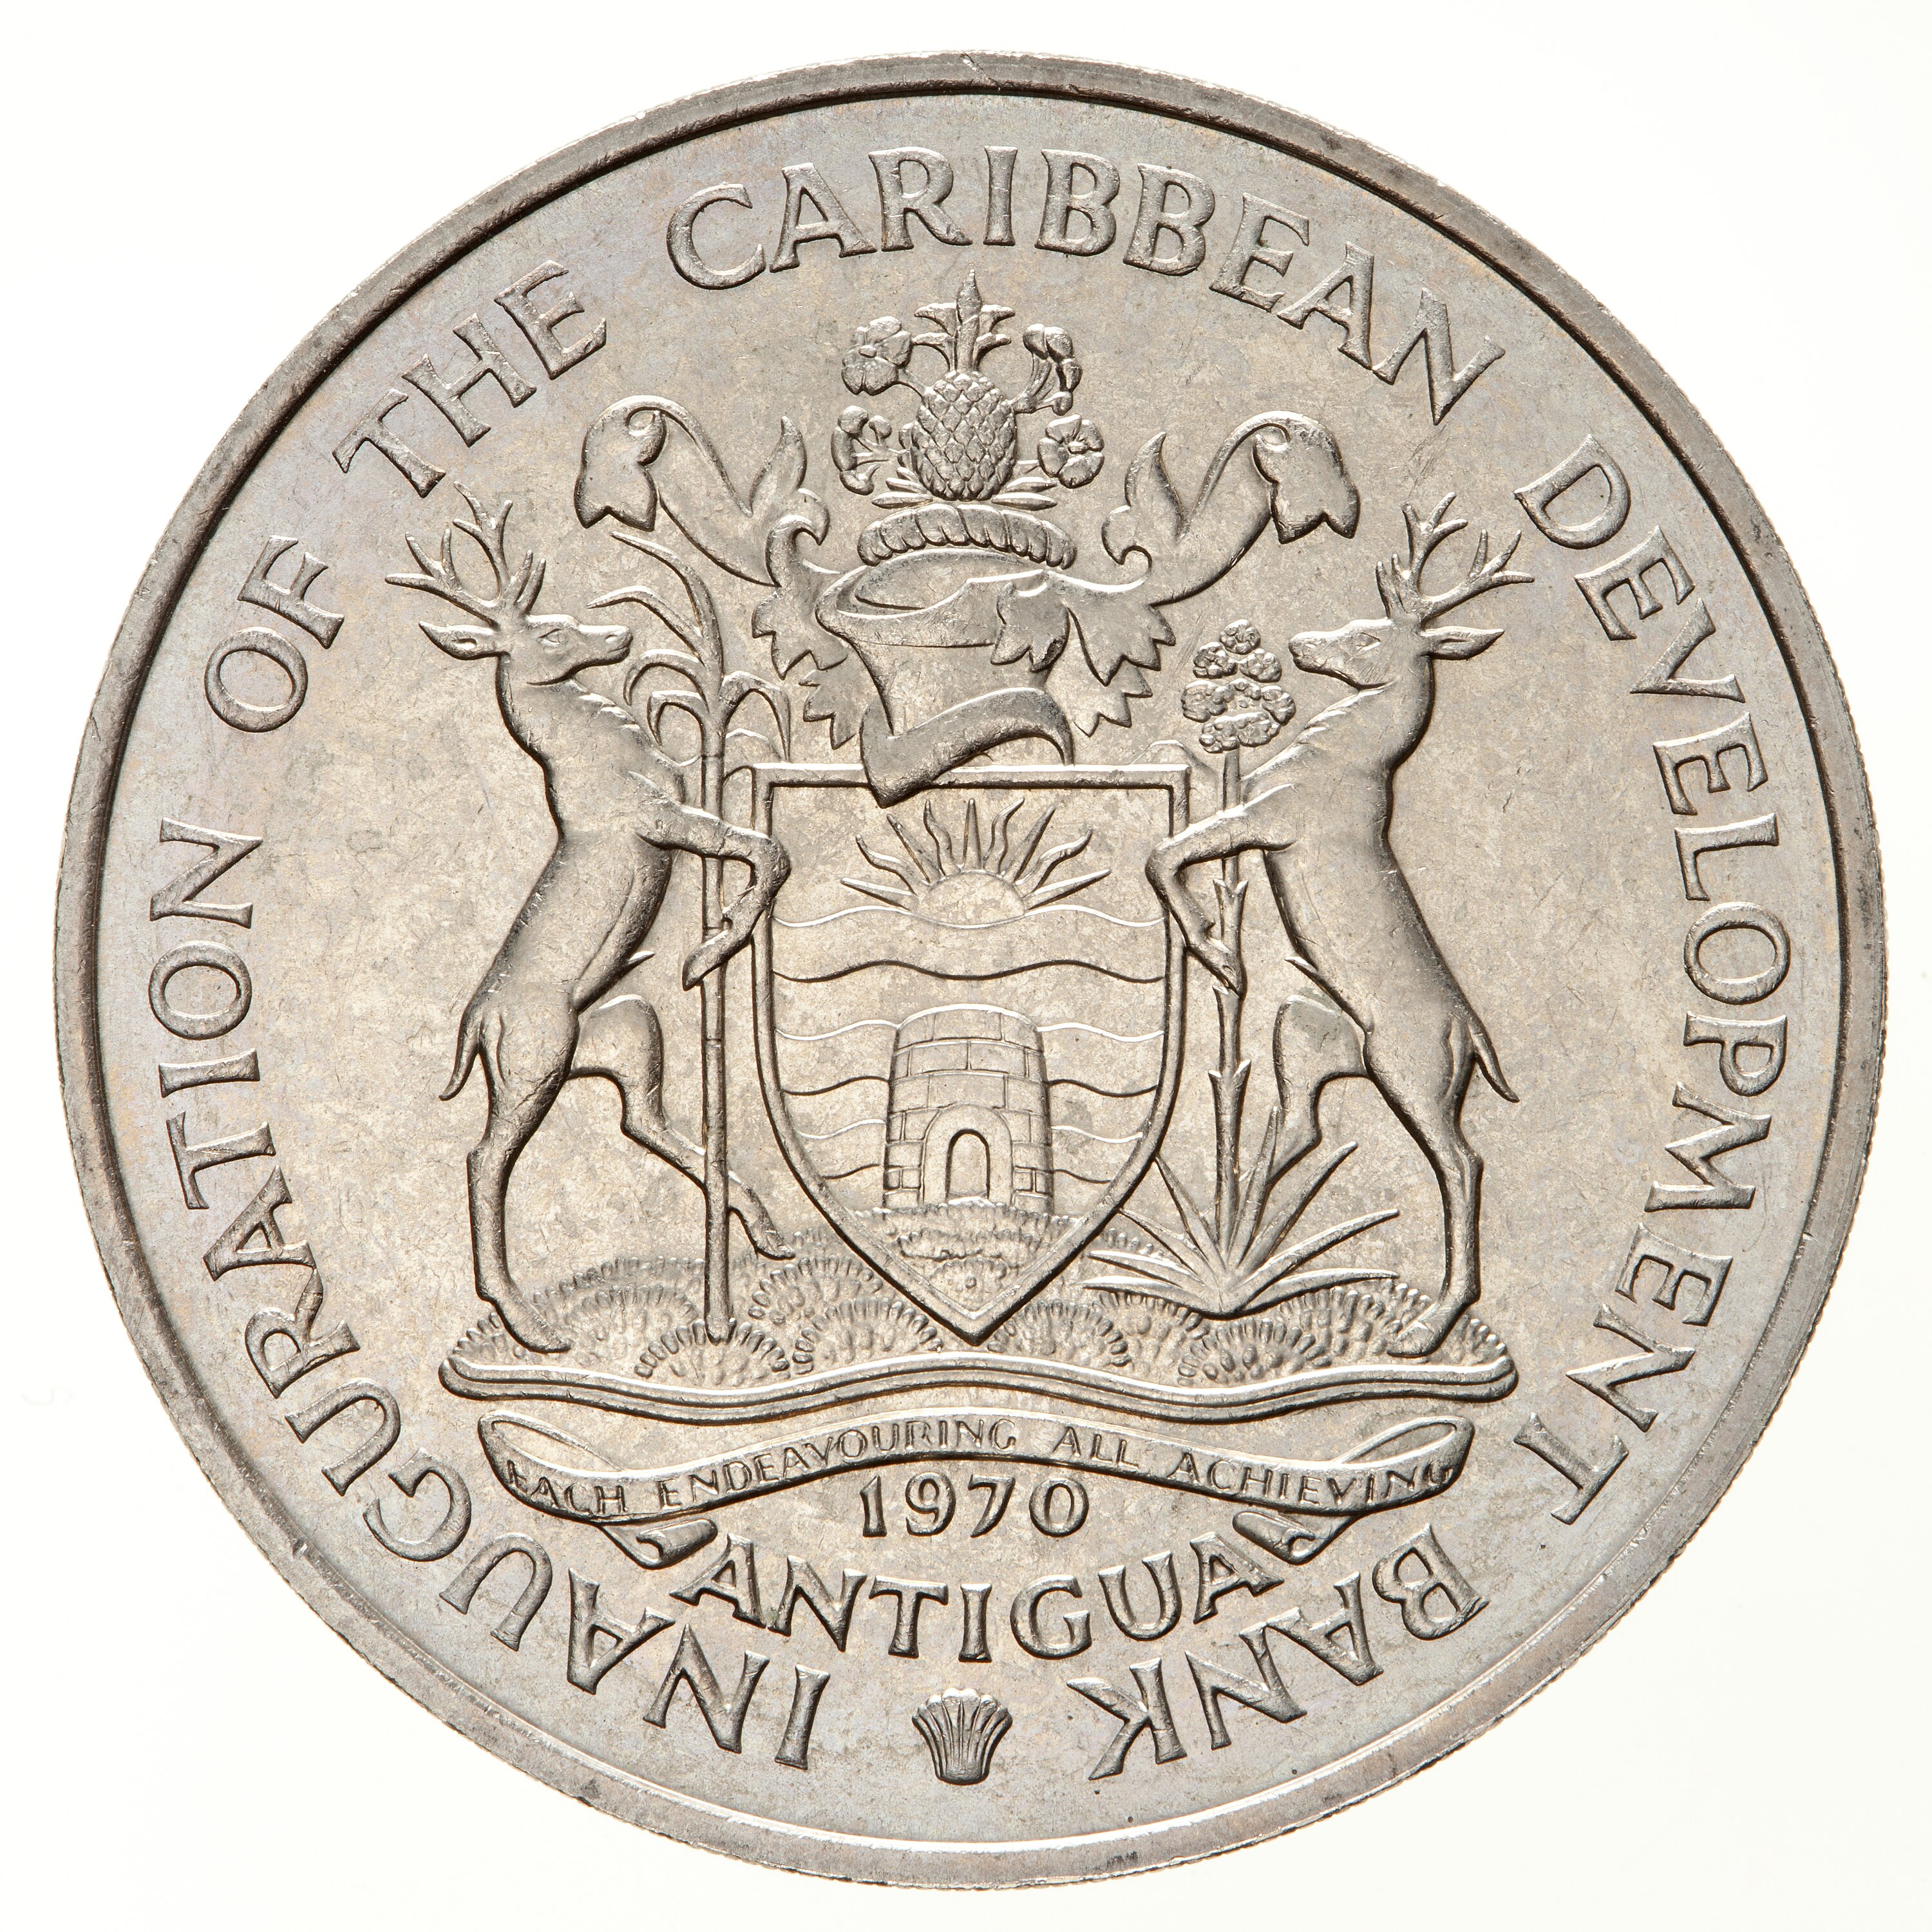 The Caribbean Development Bank 1970 FAO 4 Dollars Copper-Nickel 8 Coins Set UNC